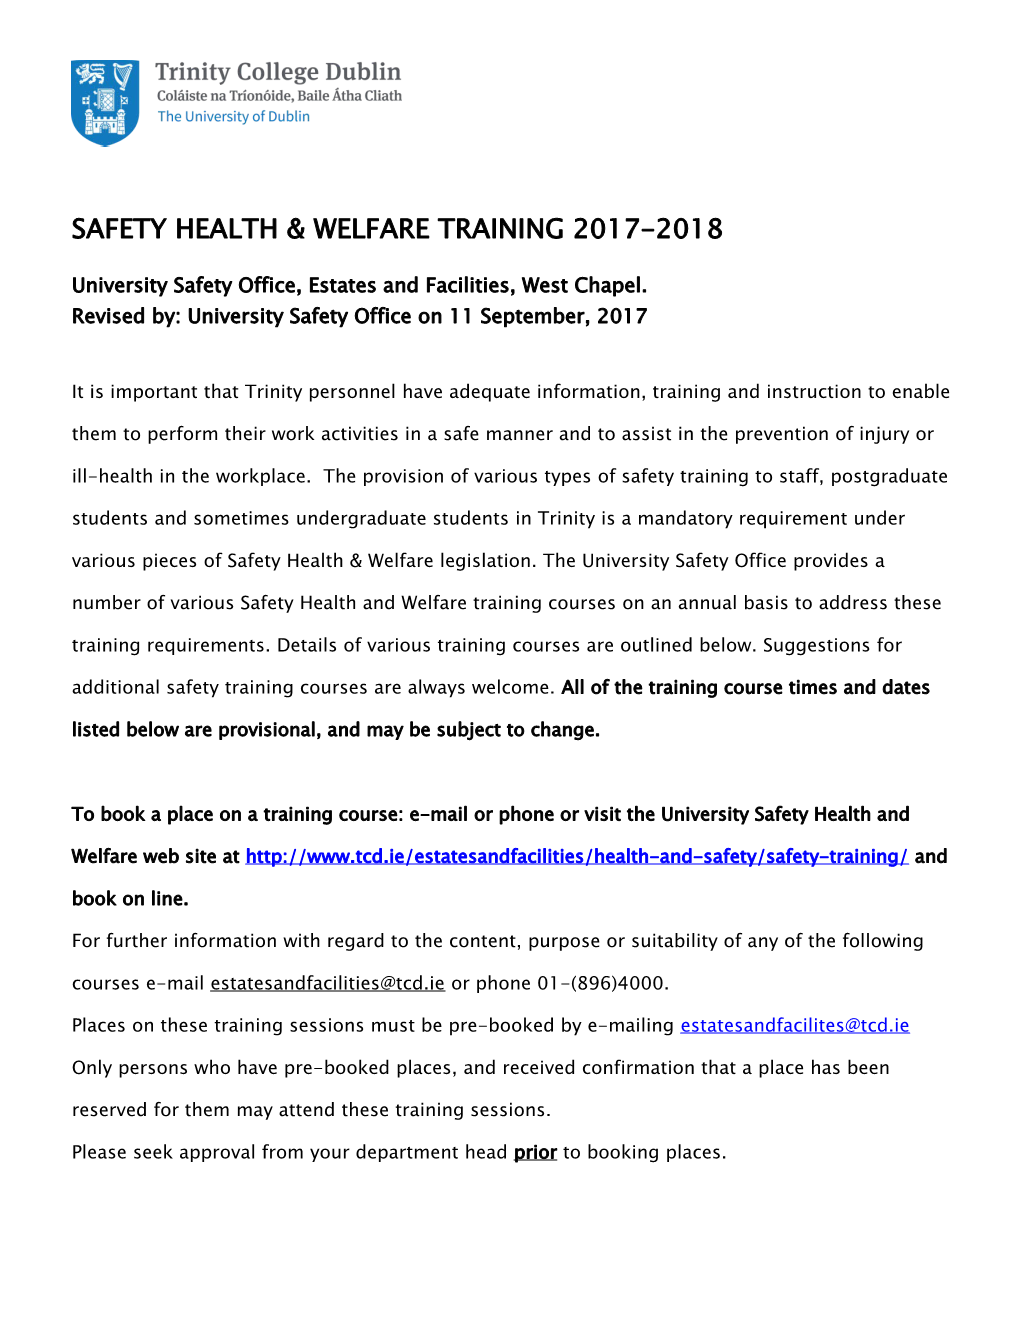 Safety Health & Welfare Training 2006-2007